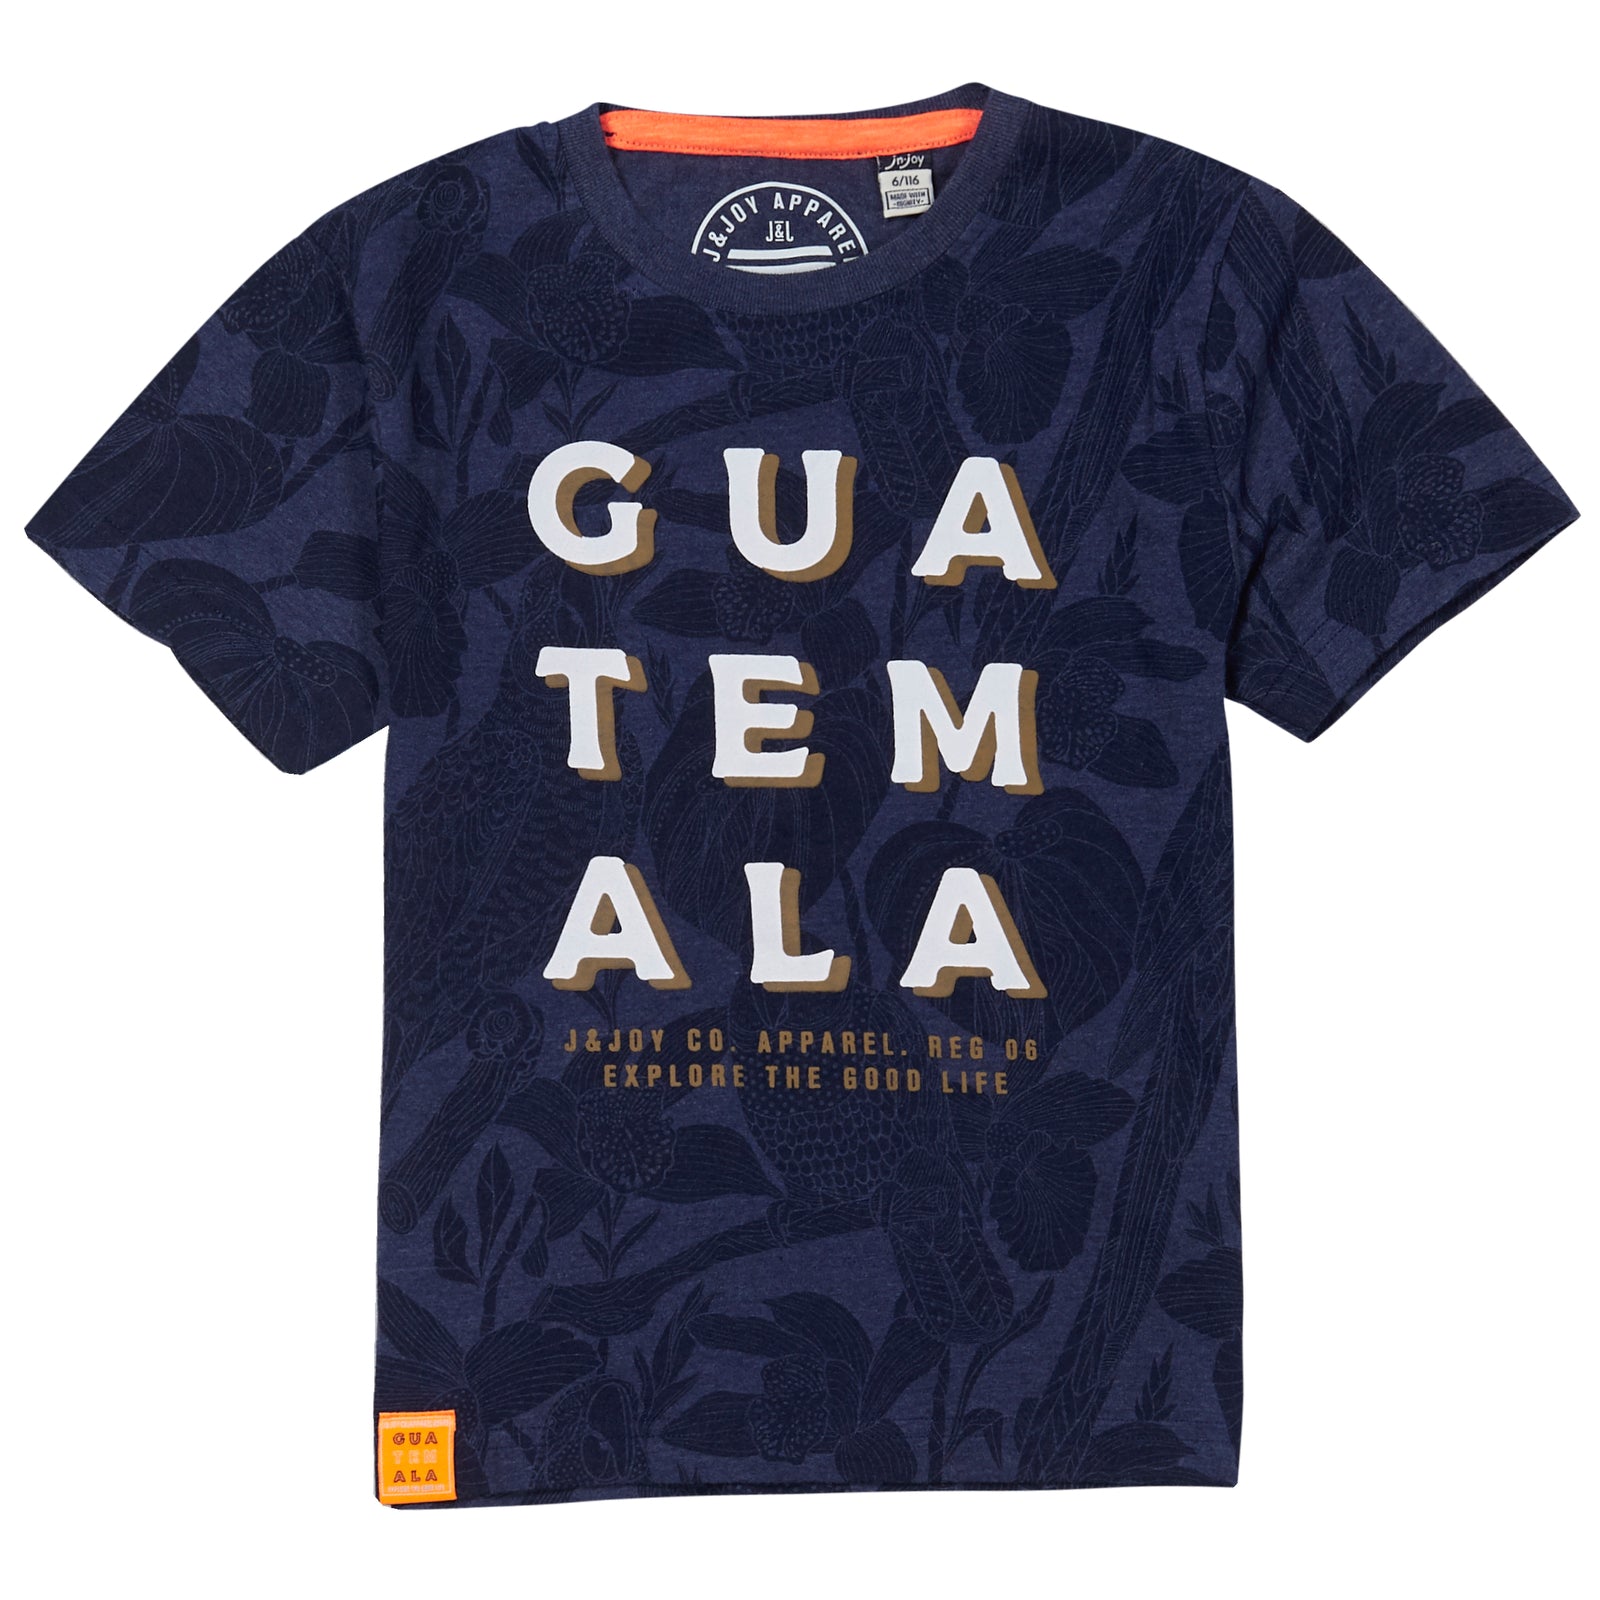 T-Shirt Garçon 17 Guatemala Indigo | J&JOY.